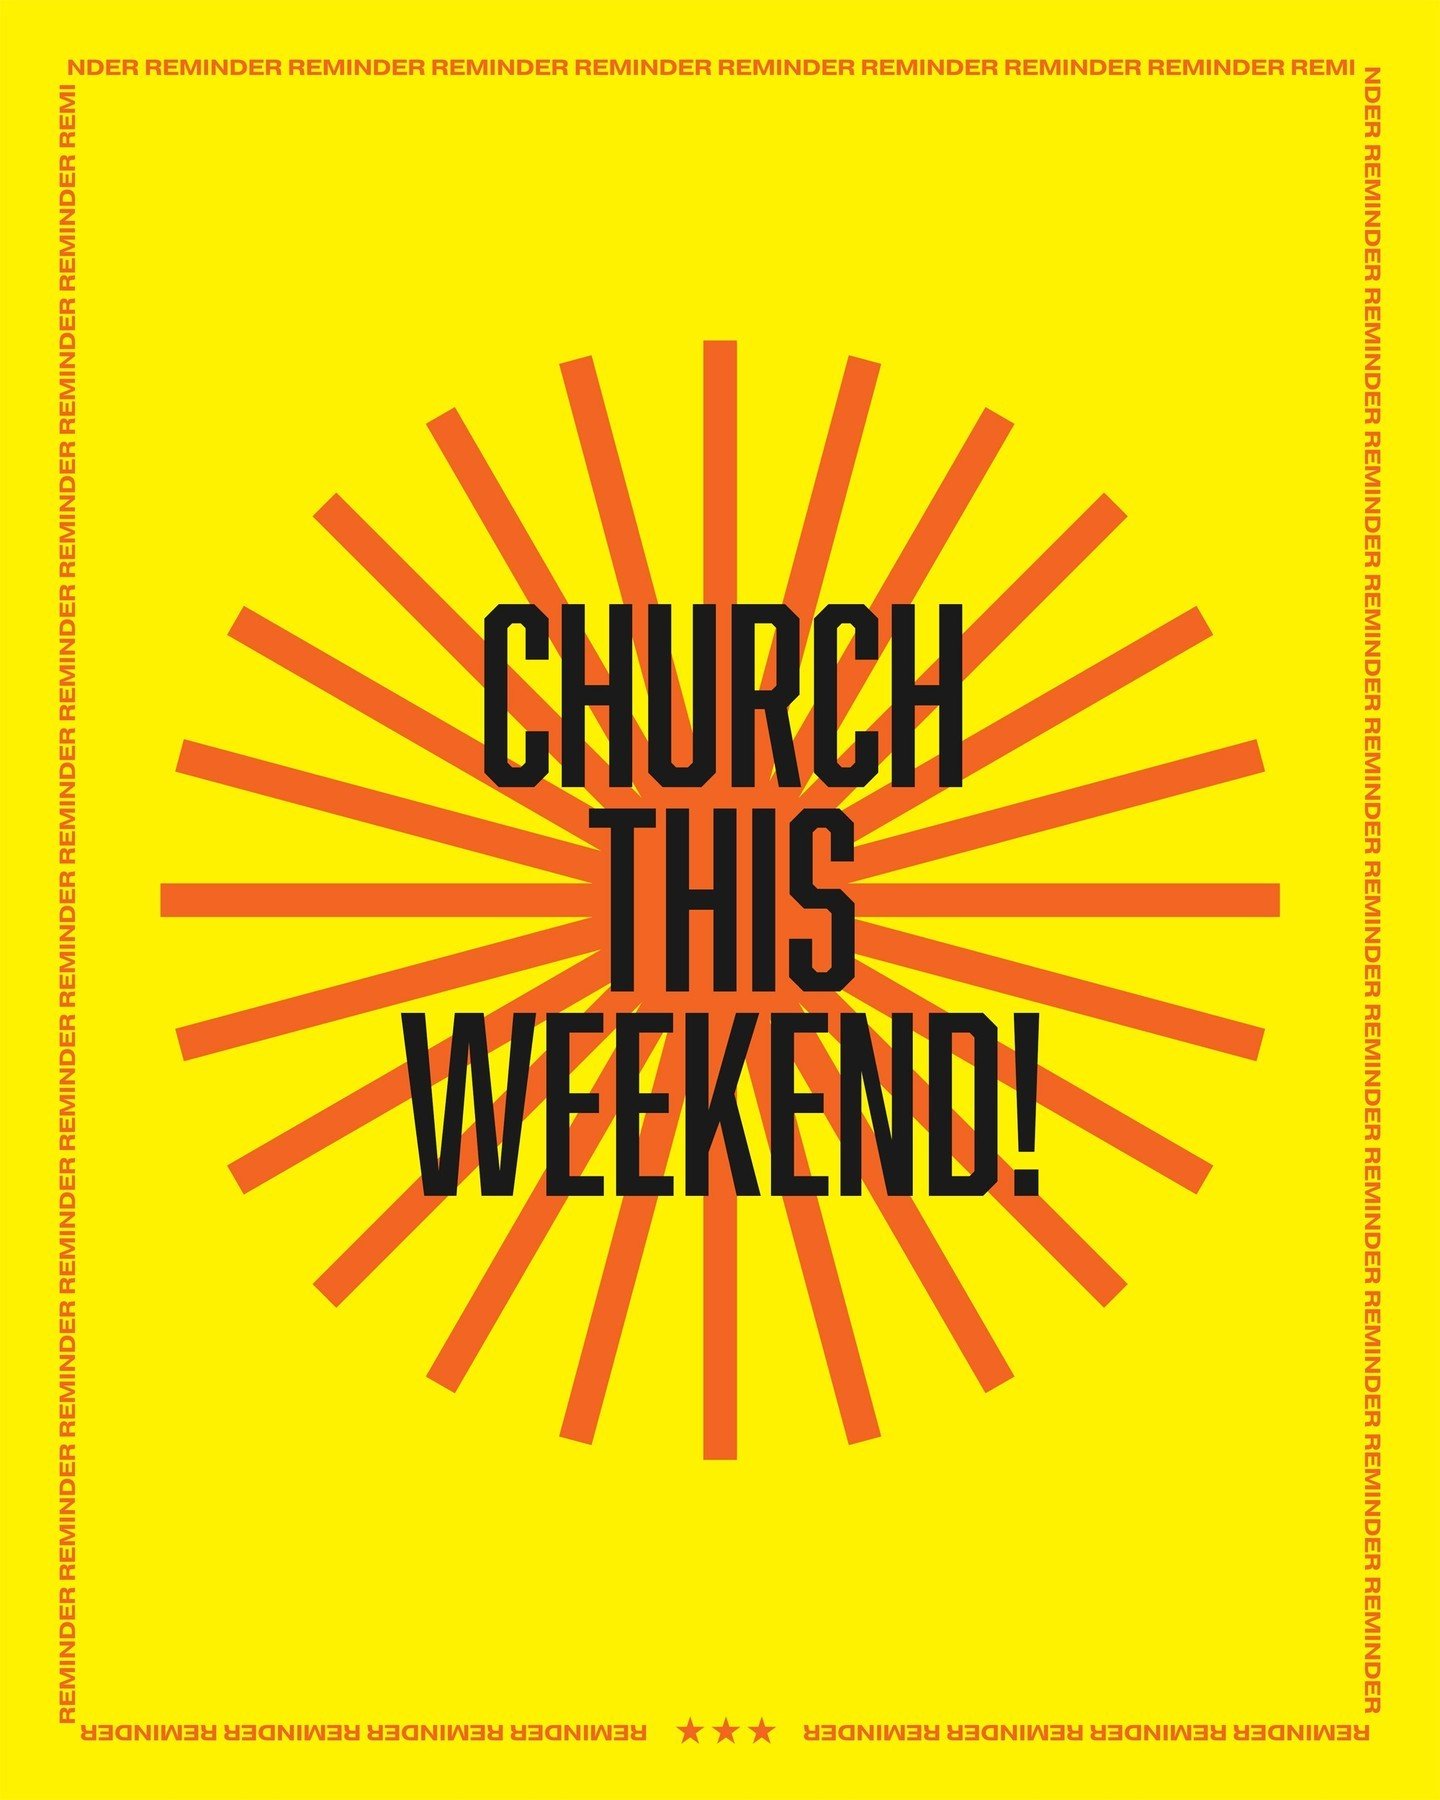 Reminder: Church this weekend!
.
.
.
#church #god #morning #jesus #christ #love #christian #saturday #service #worship #christianlife